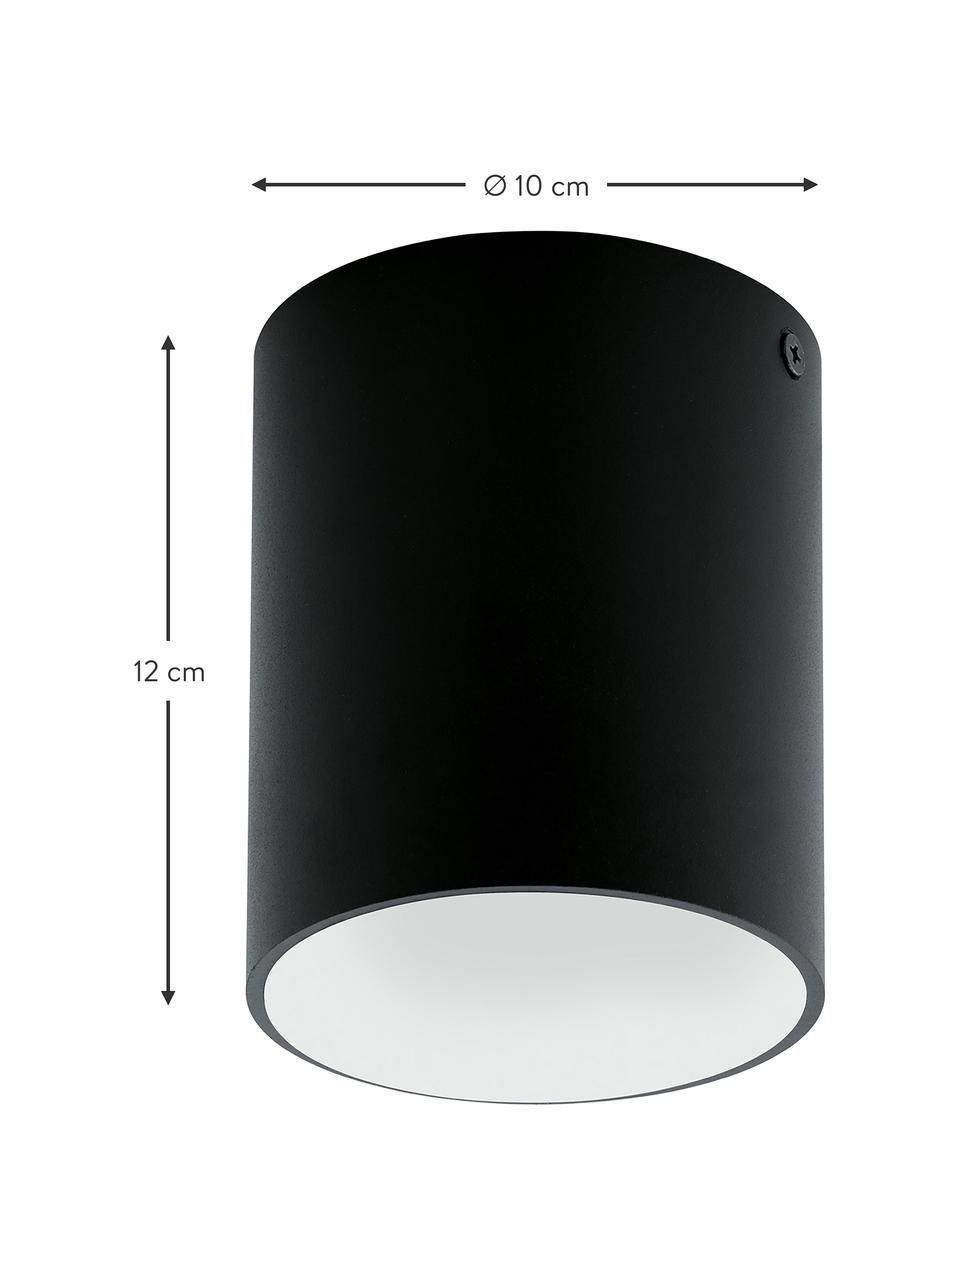 Stropná bodová LED lampa Marty, Čierna, biela, Ø 10 x V 12 cm